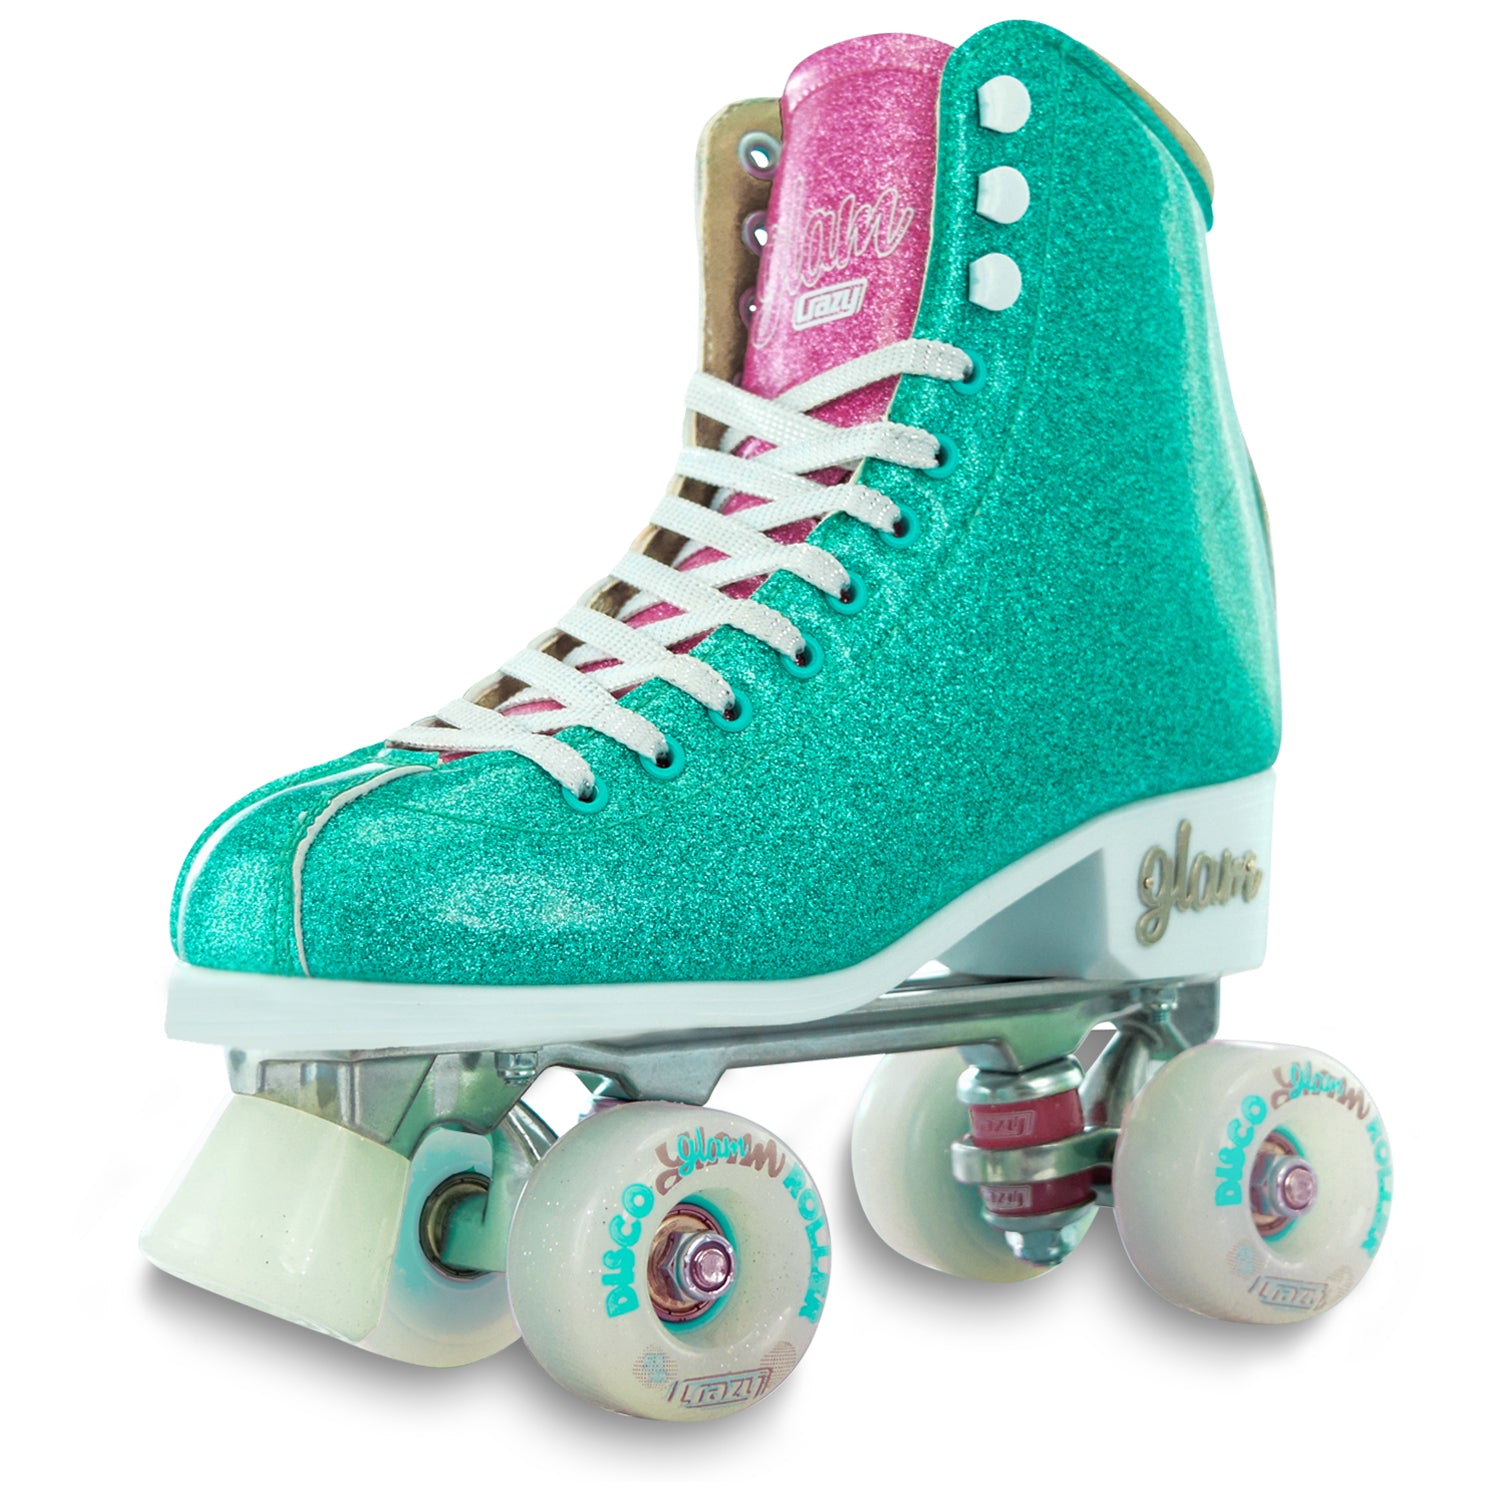 Crazy Skates Disco Glam Teal/Pink Roller Skates - Momma Trucker Skates